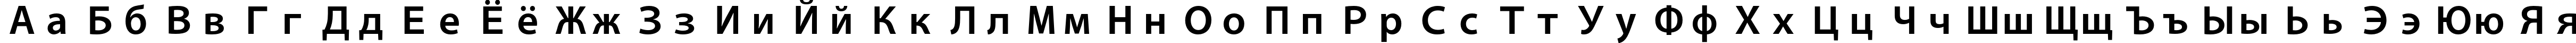 Пример написания русского алфавита шрифтом Adobe Gothic Std B